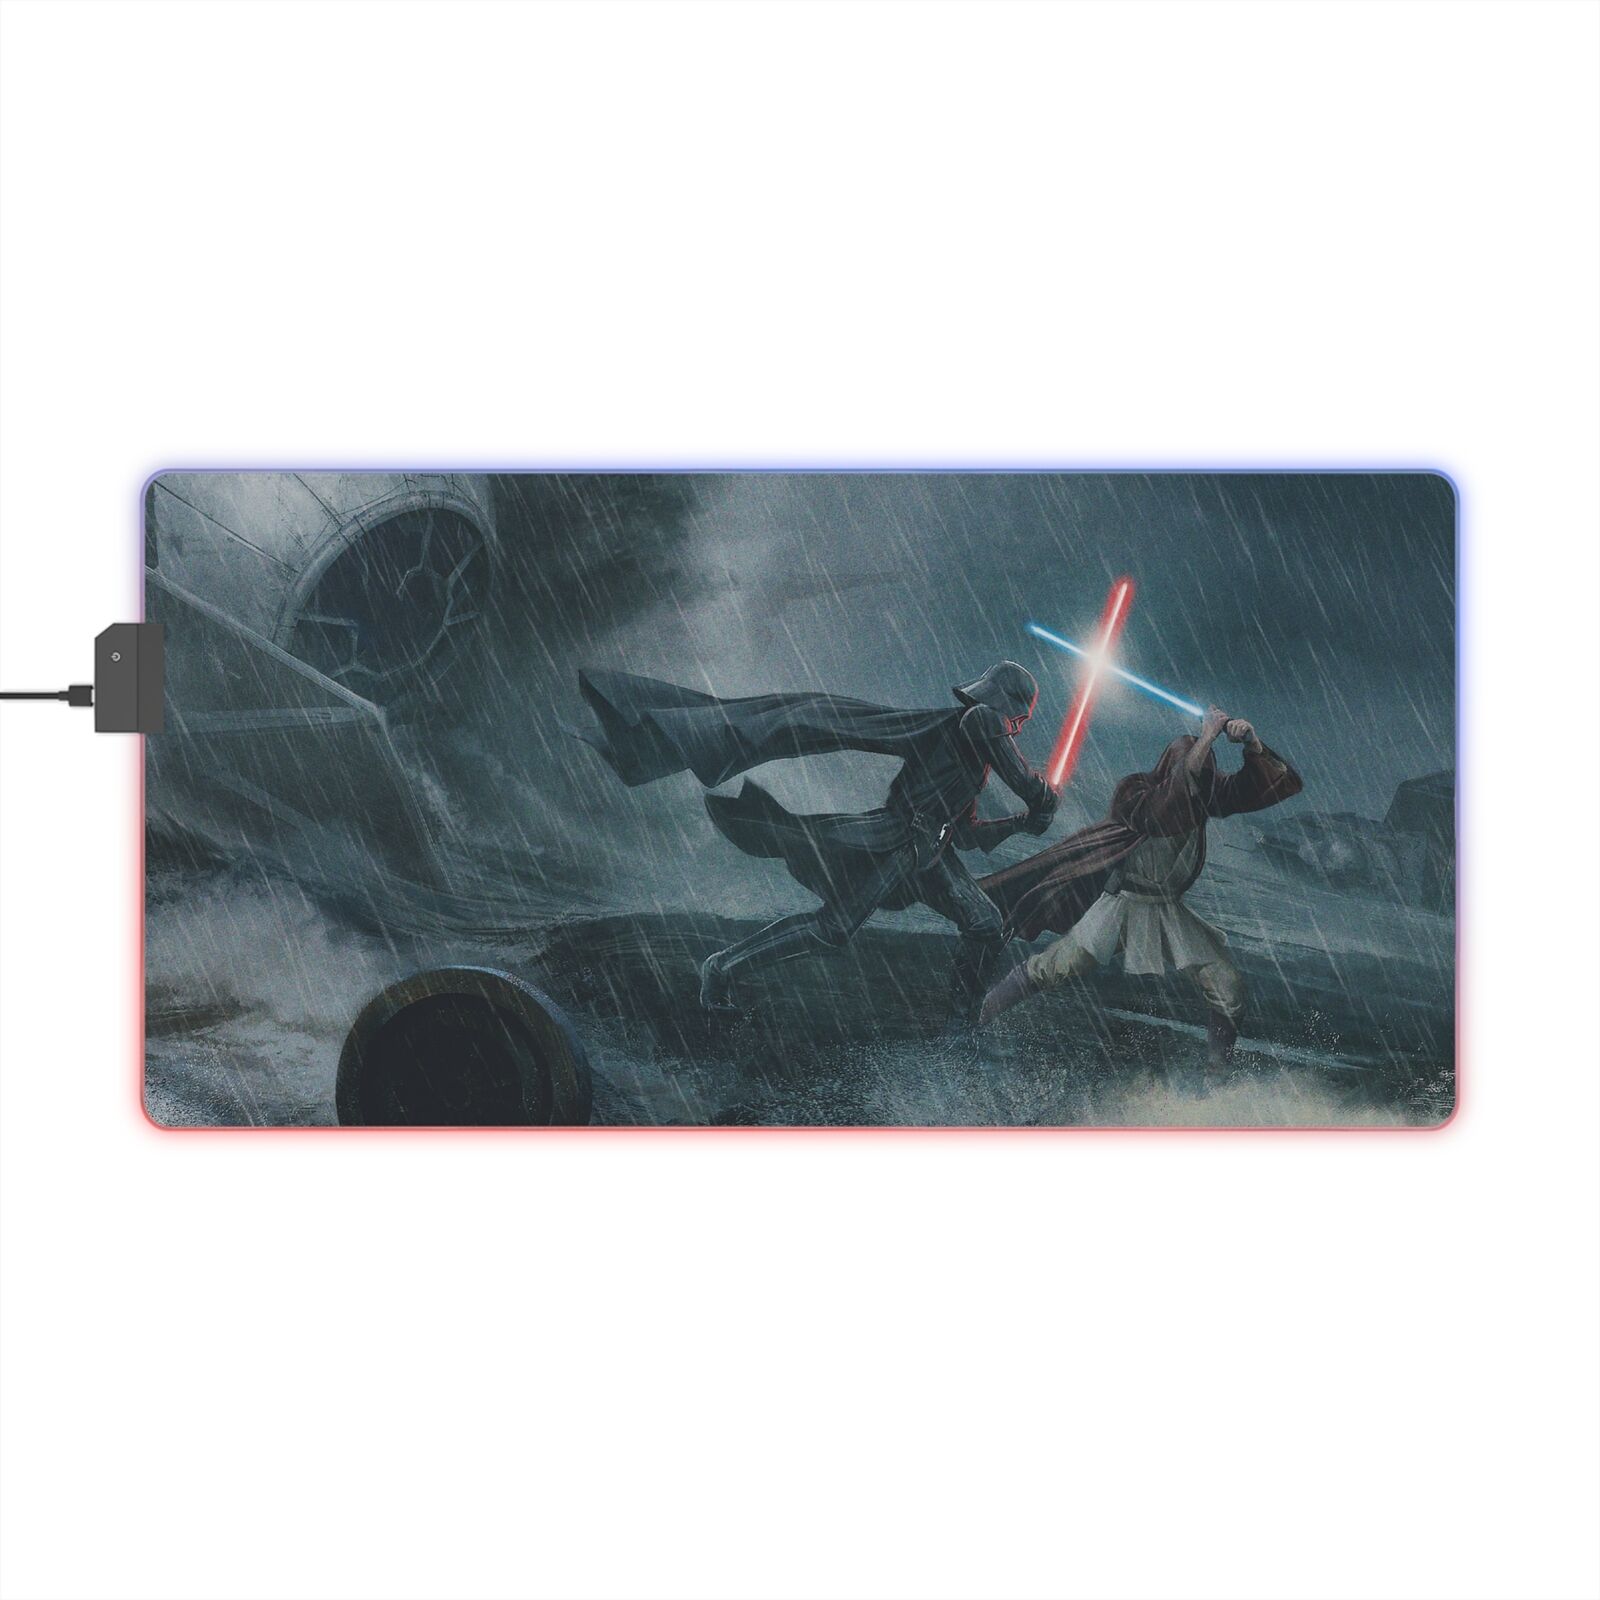 Obi Wan vs Darth Vader LED Gaming Mouse Pad - RGB Backlit, Non-Slip Rubber Base